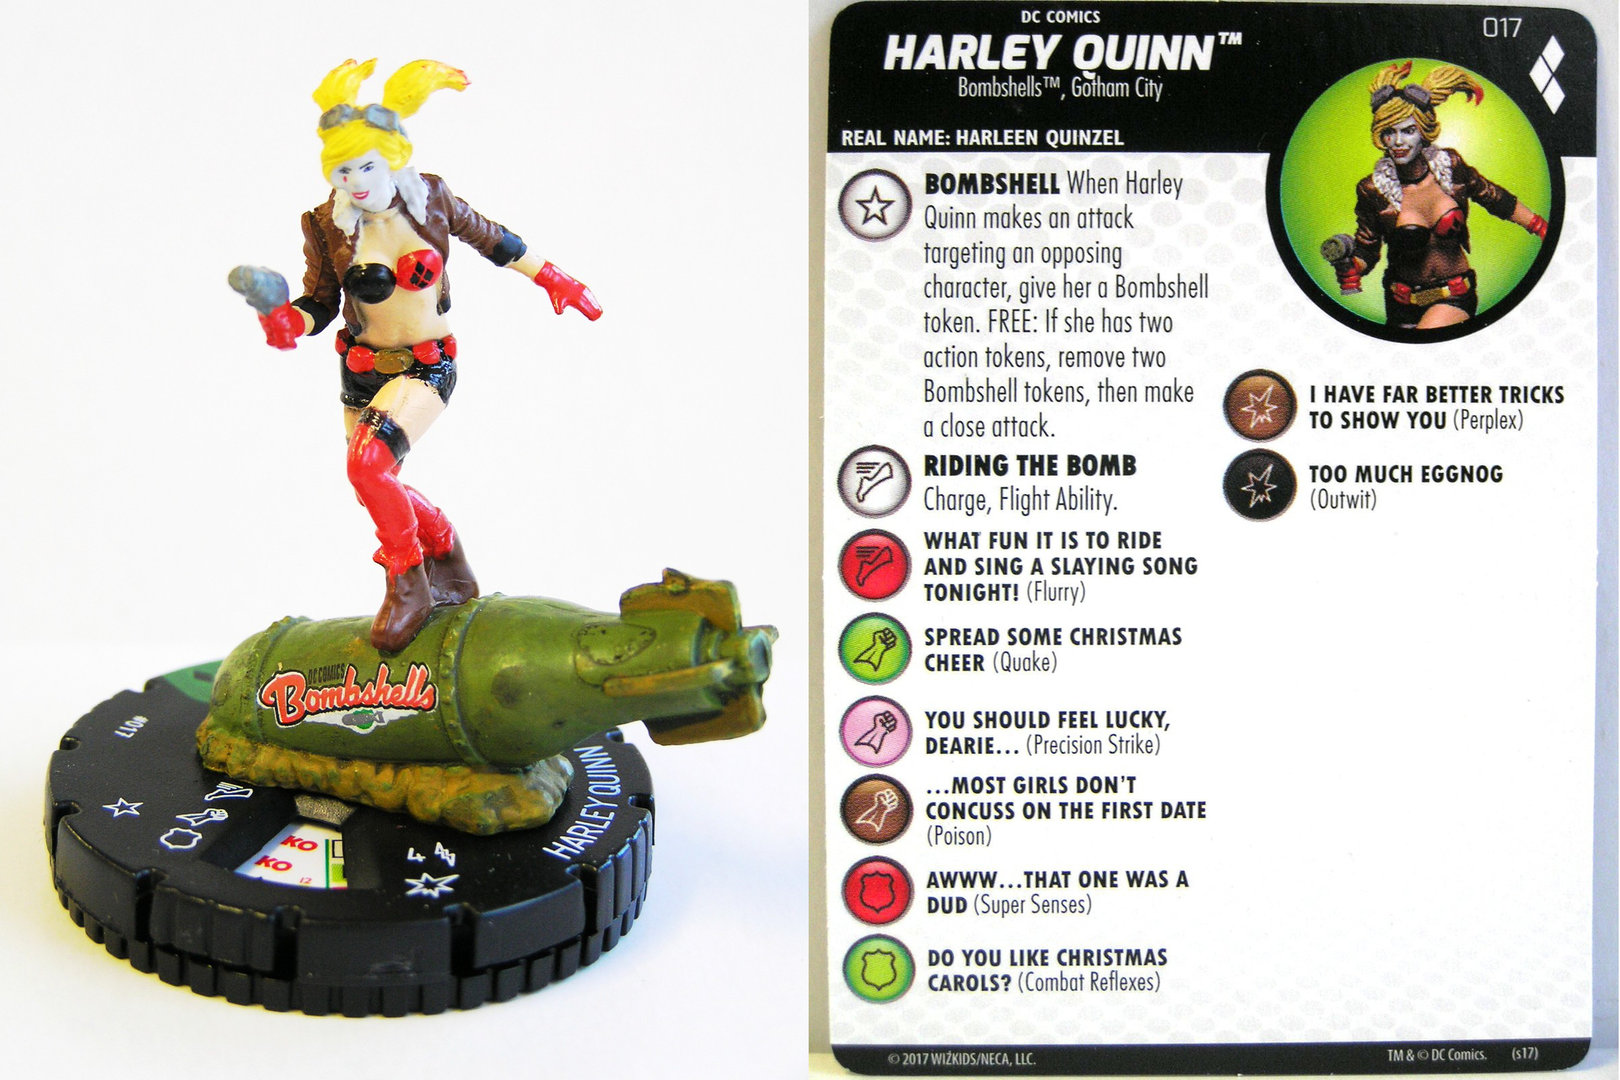 Heroclix Harley Quinn Gotham Girls set The Joker #002 Common figure w/card! 